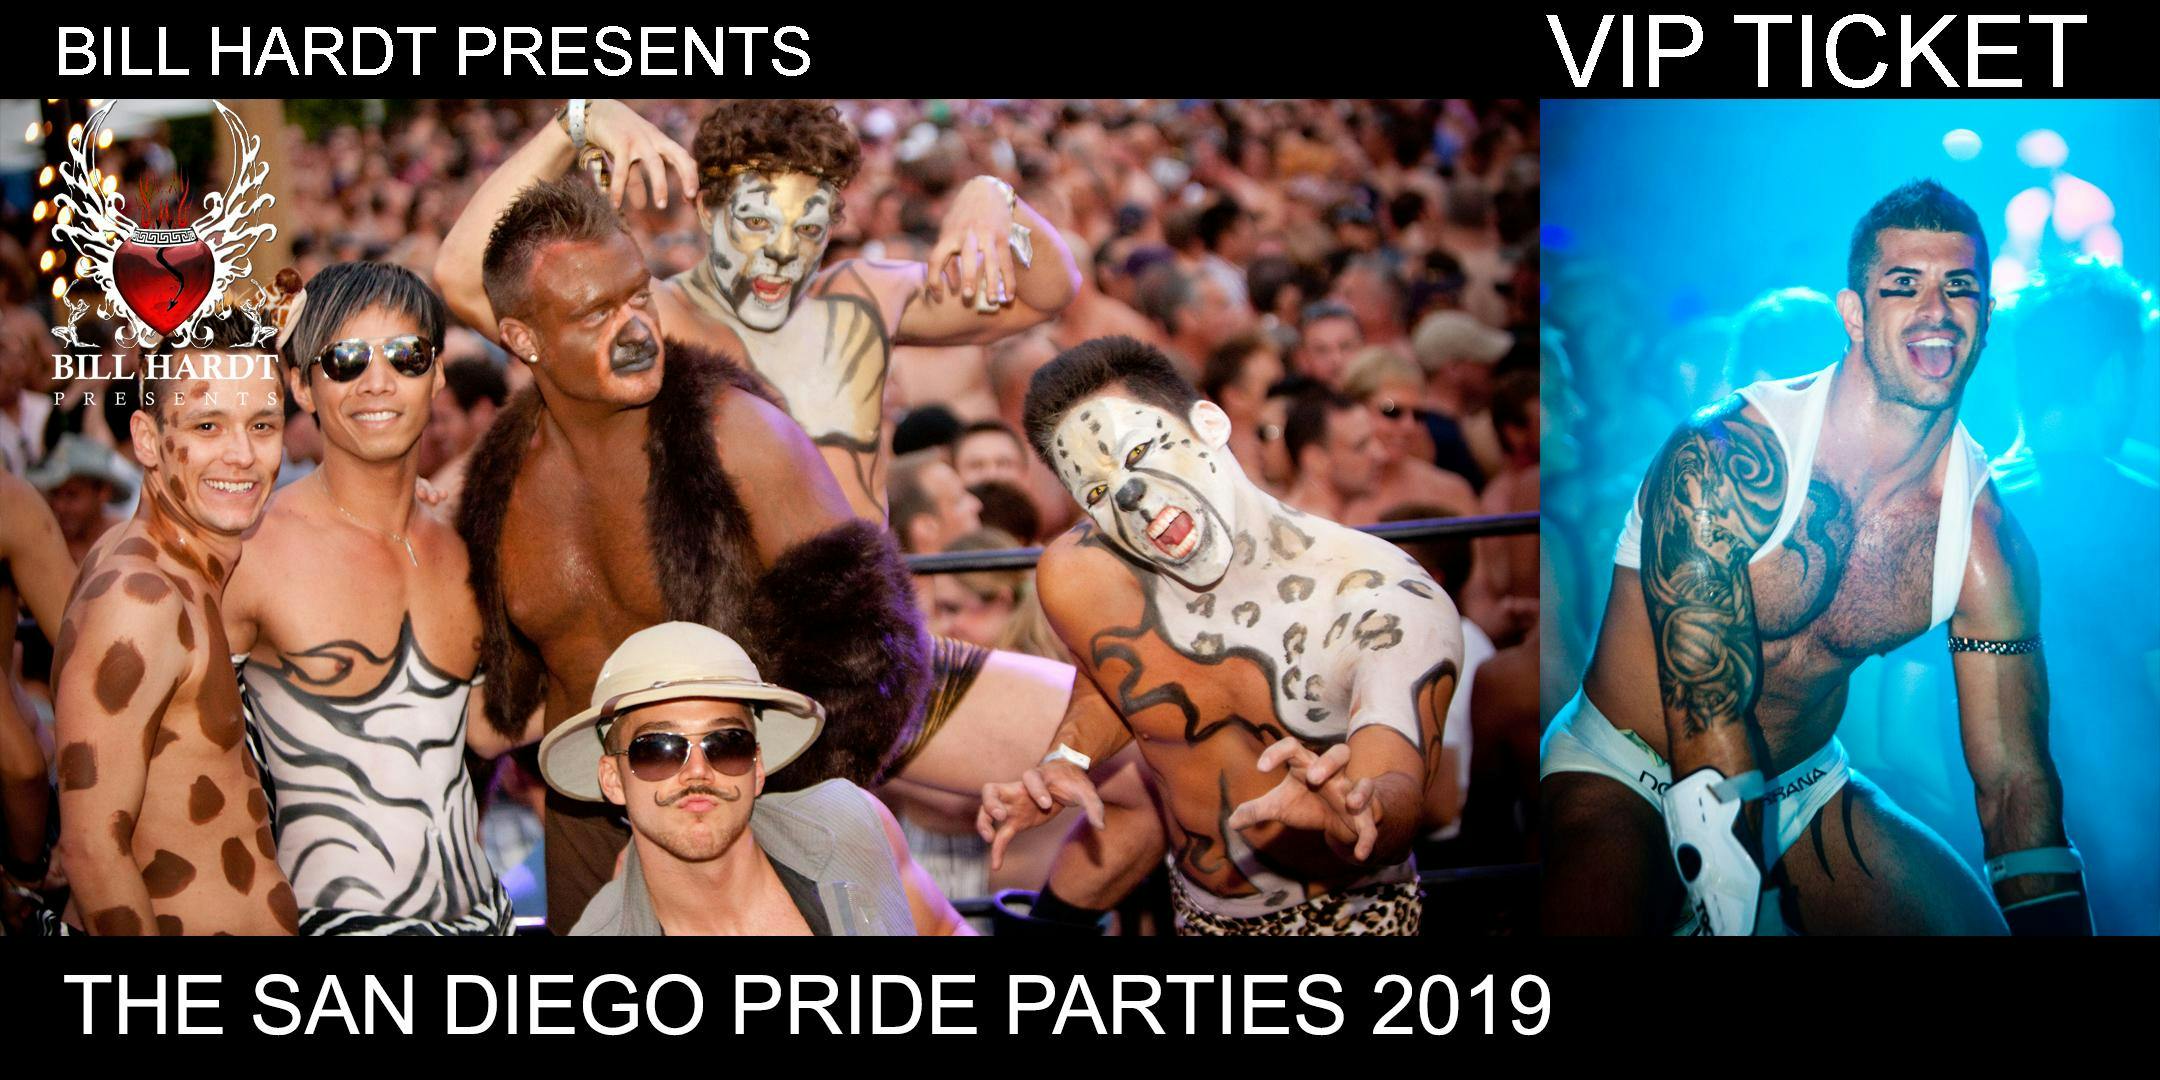 VIP TICKET 2019, Bill Hardt Presents San Diego Pride Parties